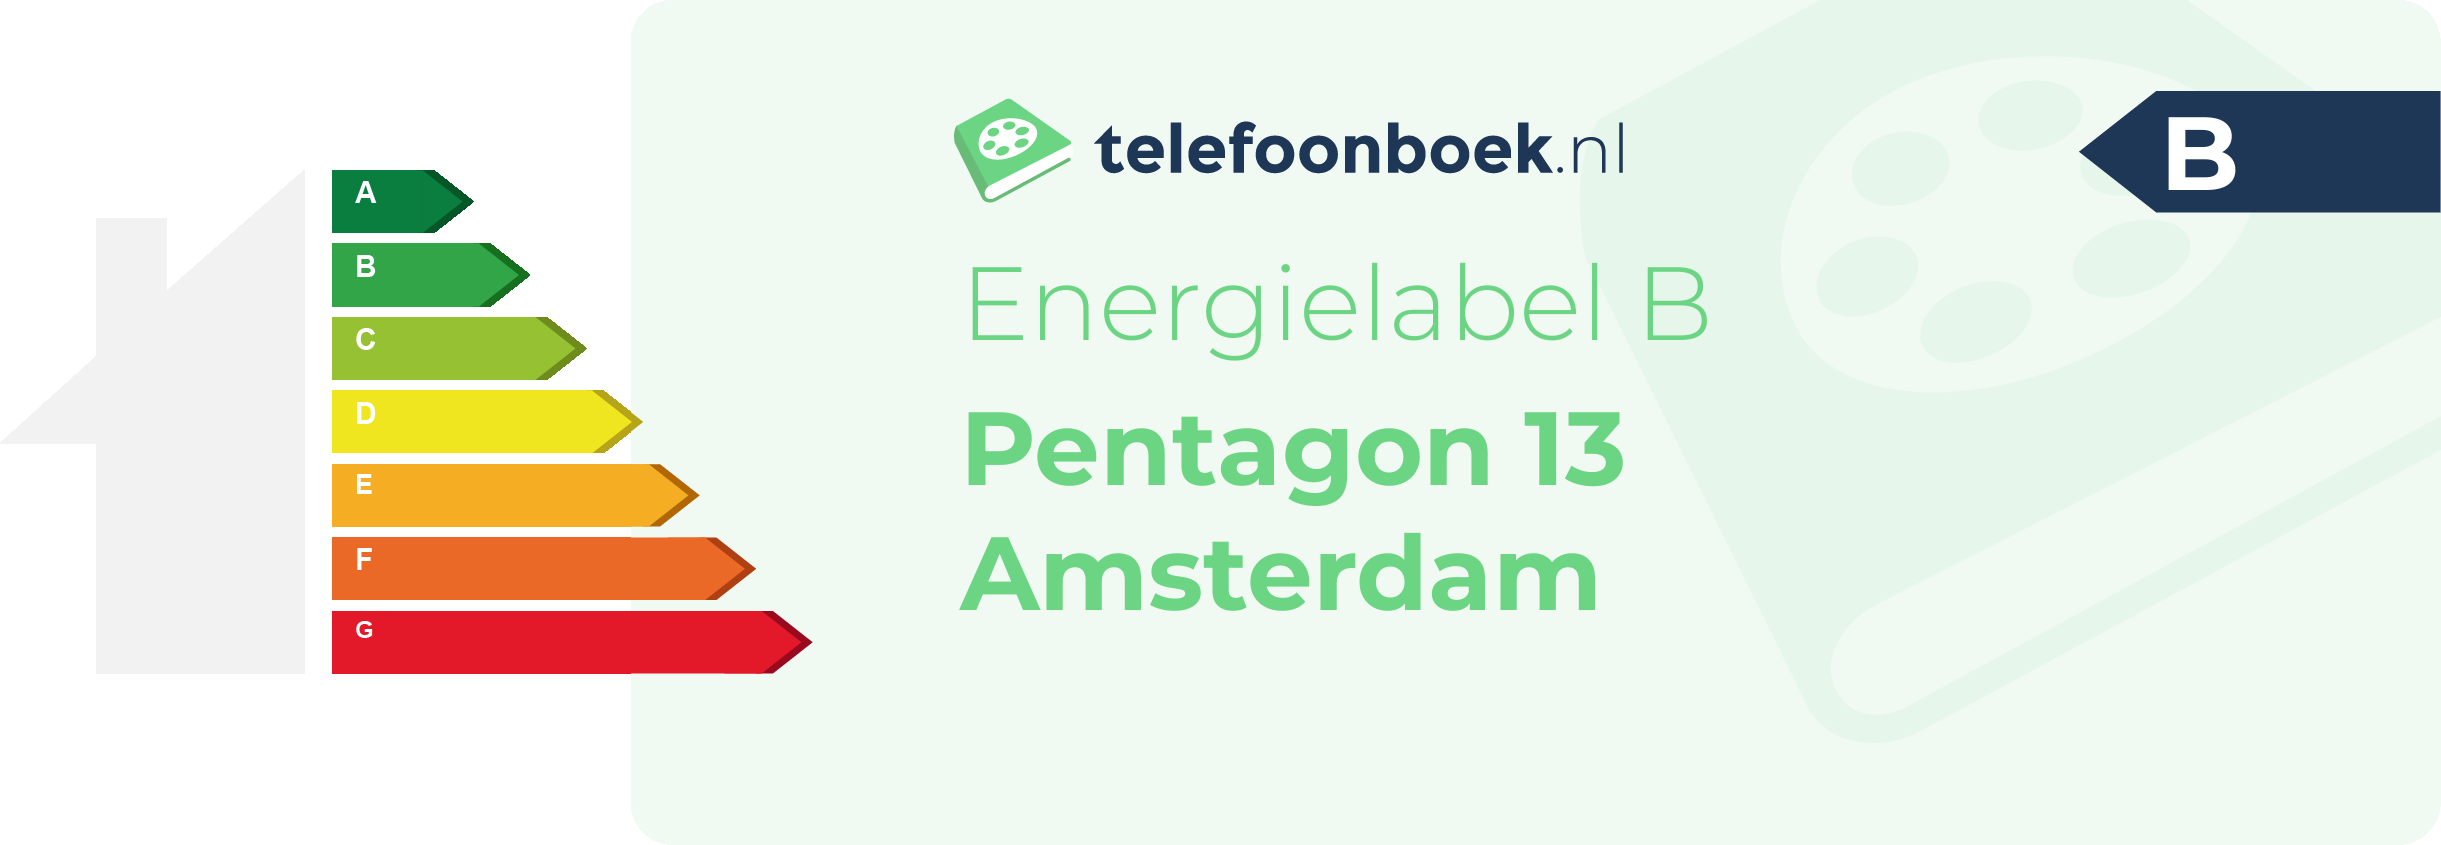 Energielabel Pentagon 13 Amsterdam